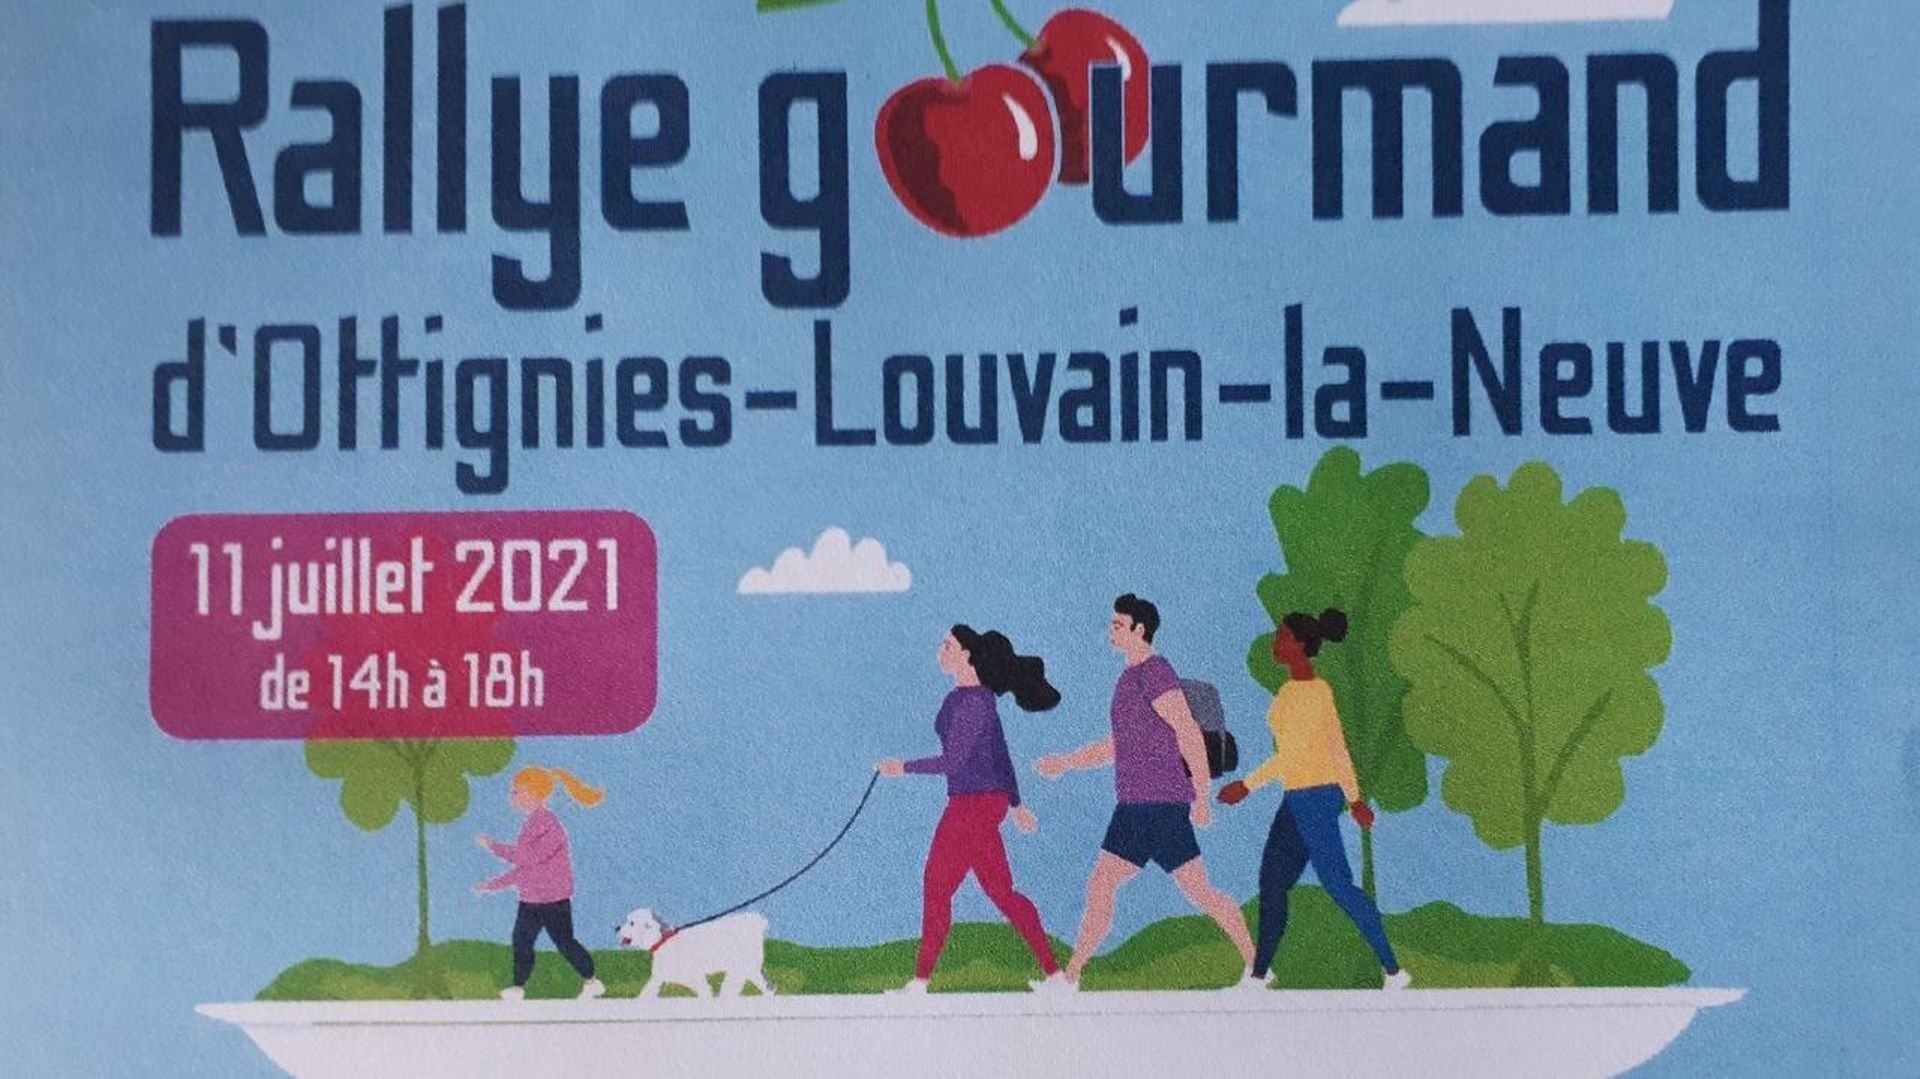 Rallye gourmand à Ottignies-Louvain-la-Neuve ce 11 juillet